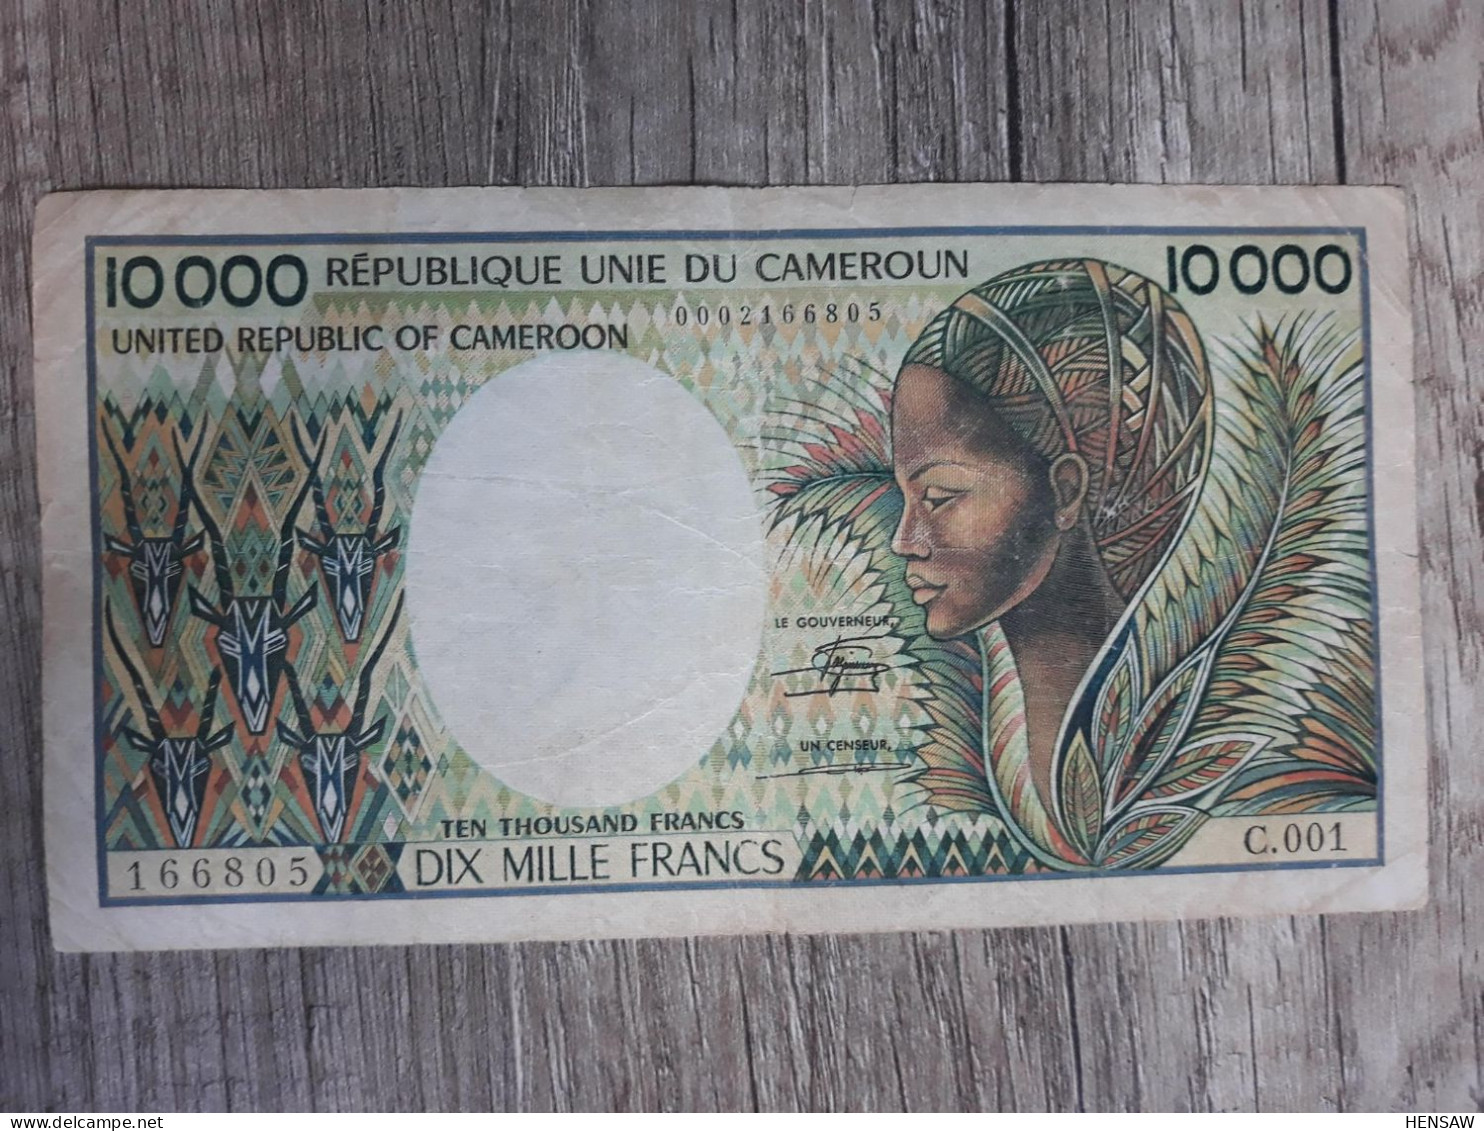 CAMEROON 10000 FRANCS 1981 ND P 20 USED USADO - Camerún